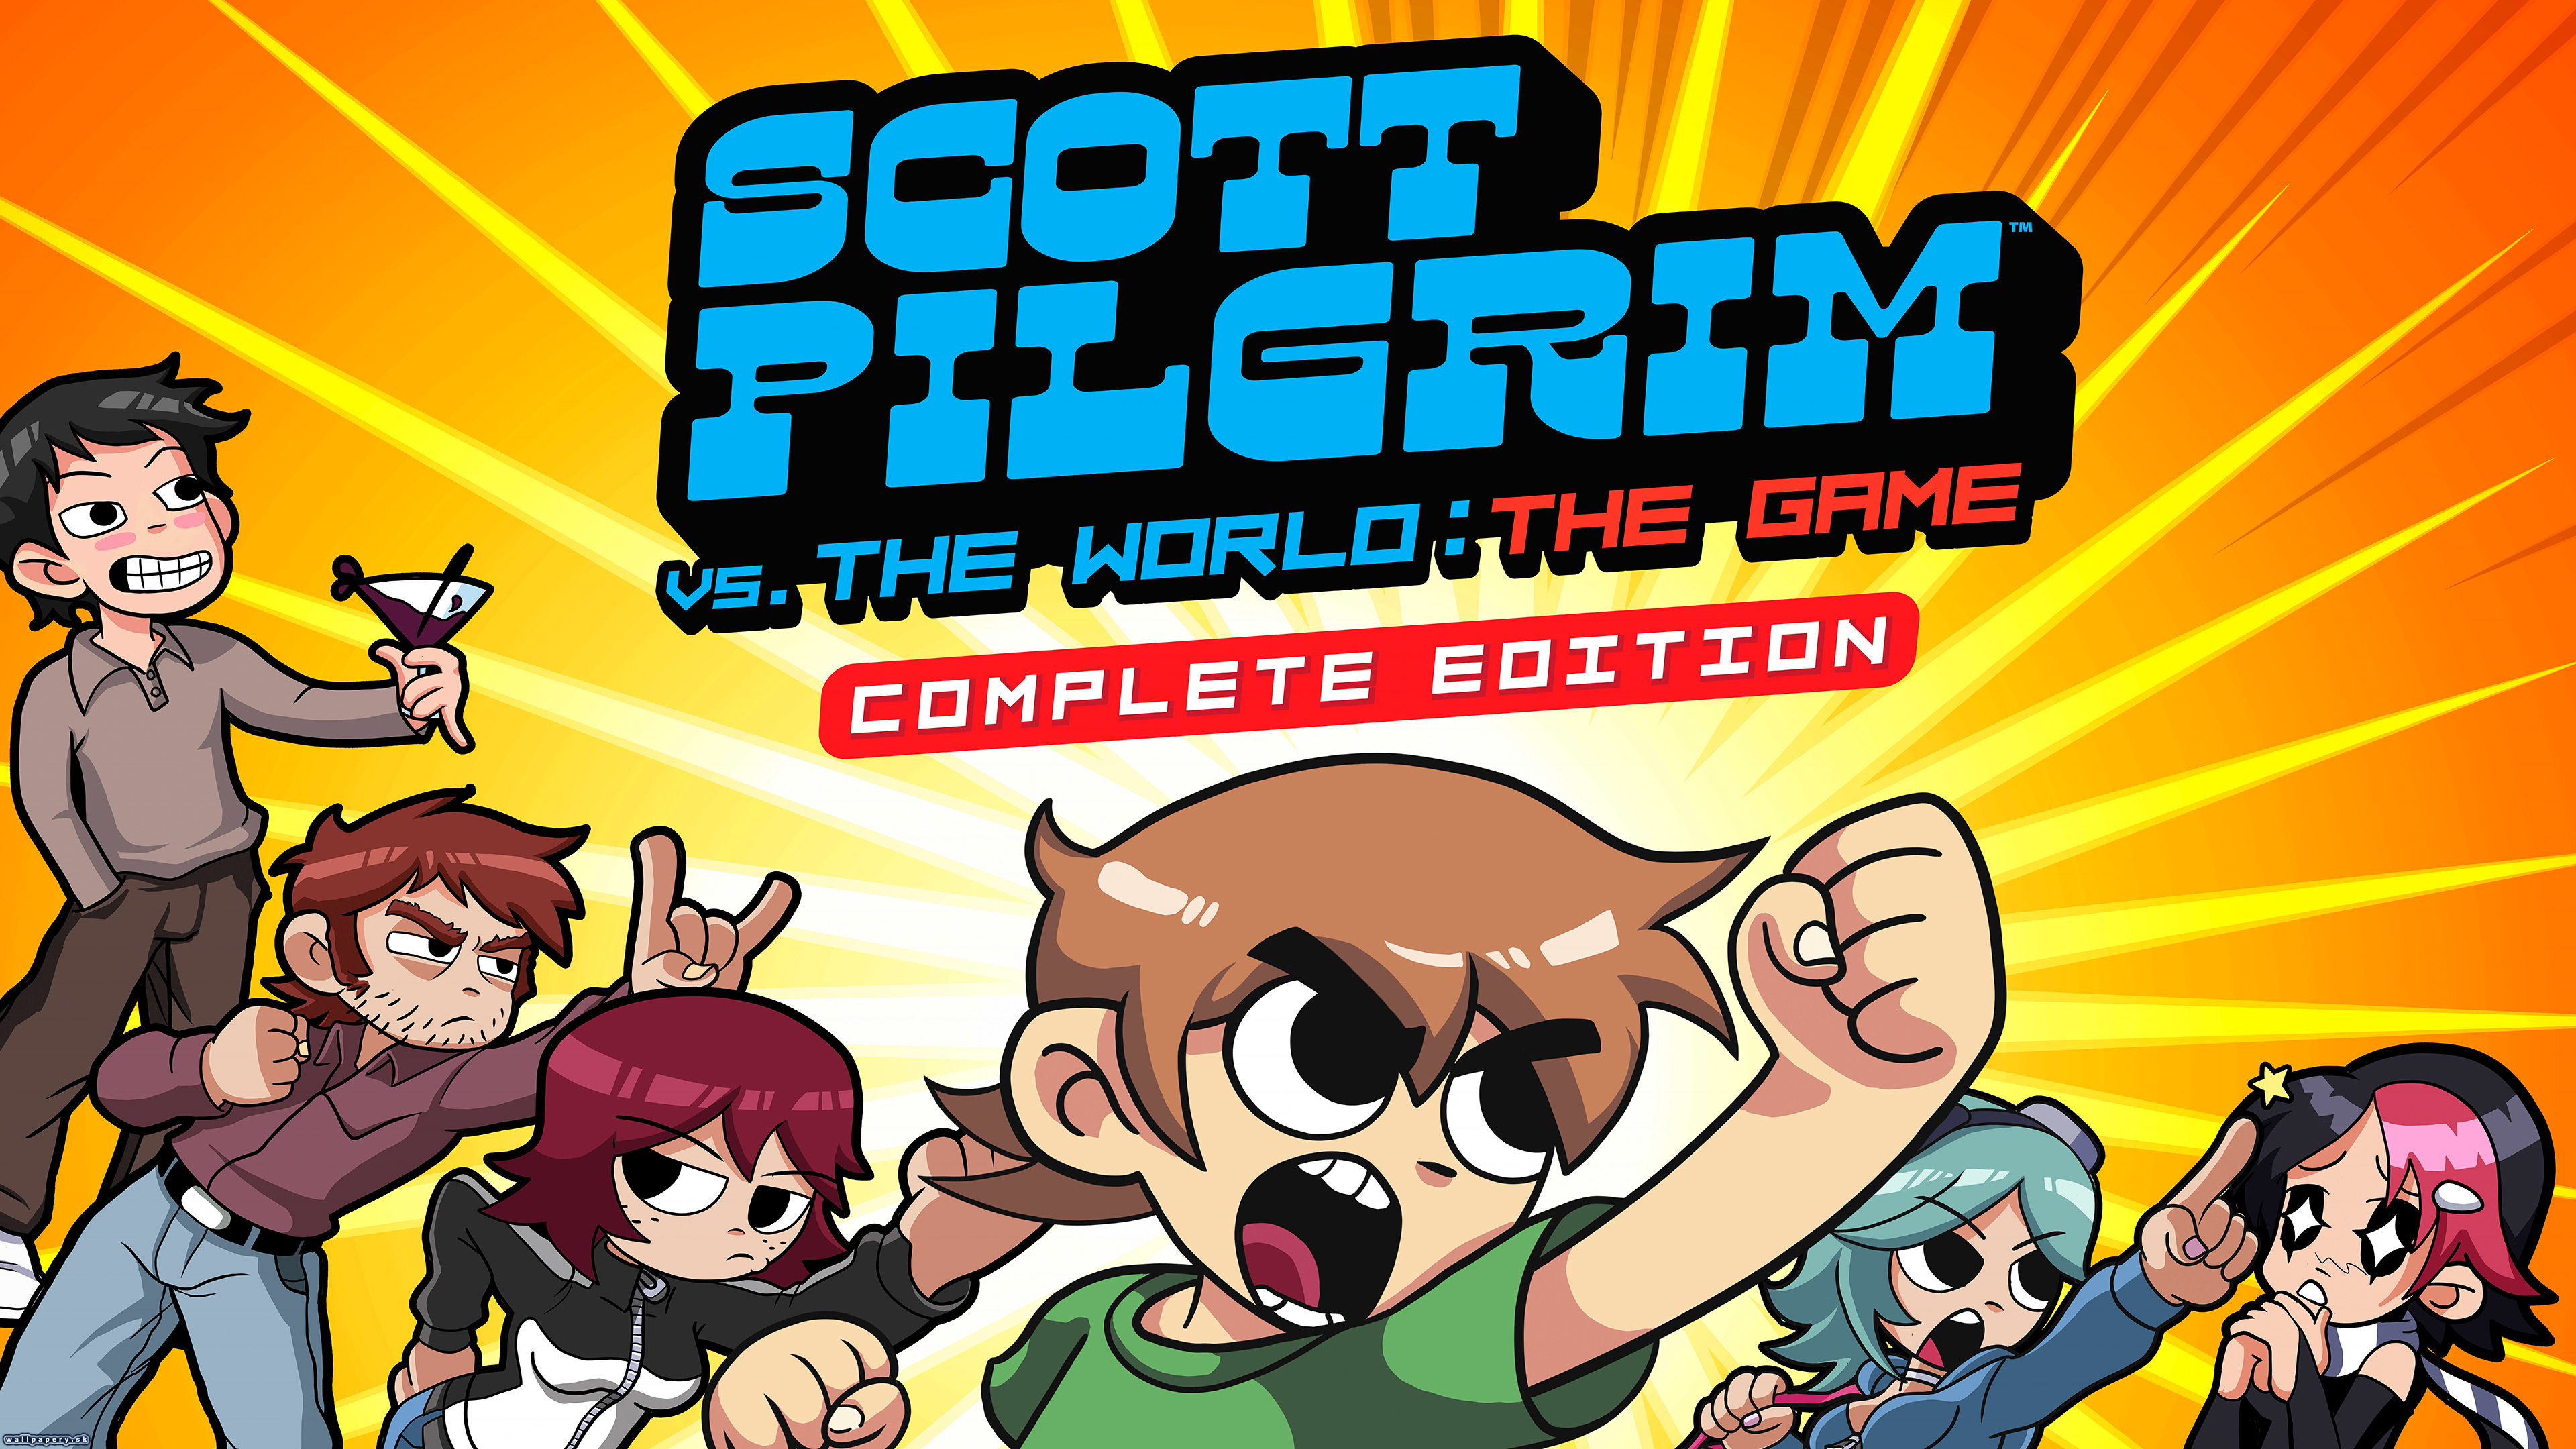 Scott Pilgrim vs. The World: The Game - Complete Edition - wallpaper 1